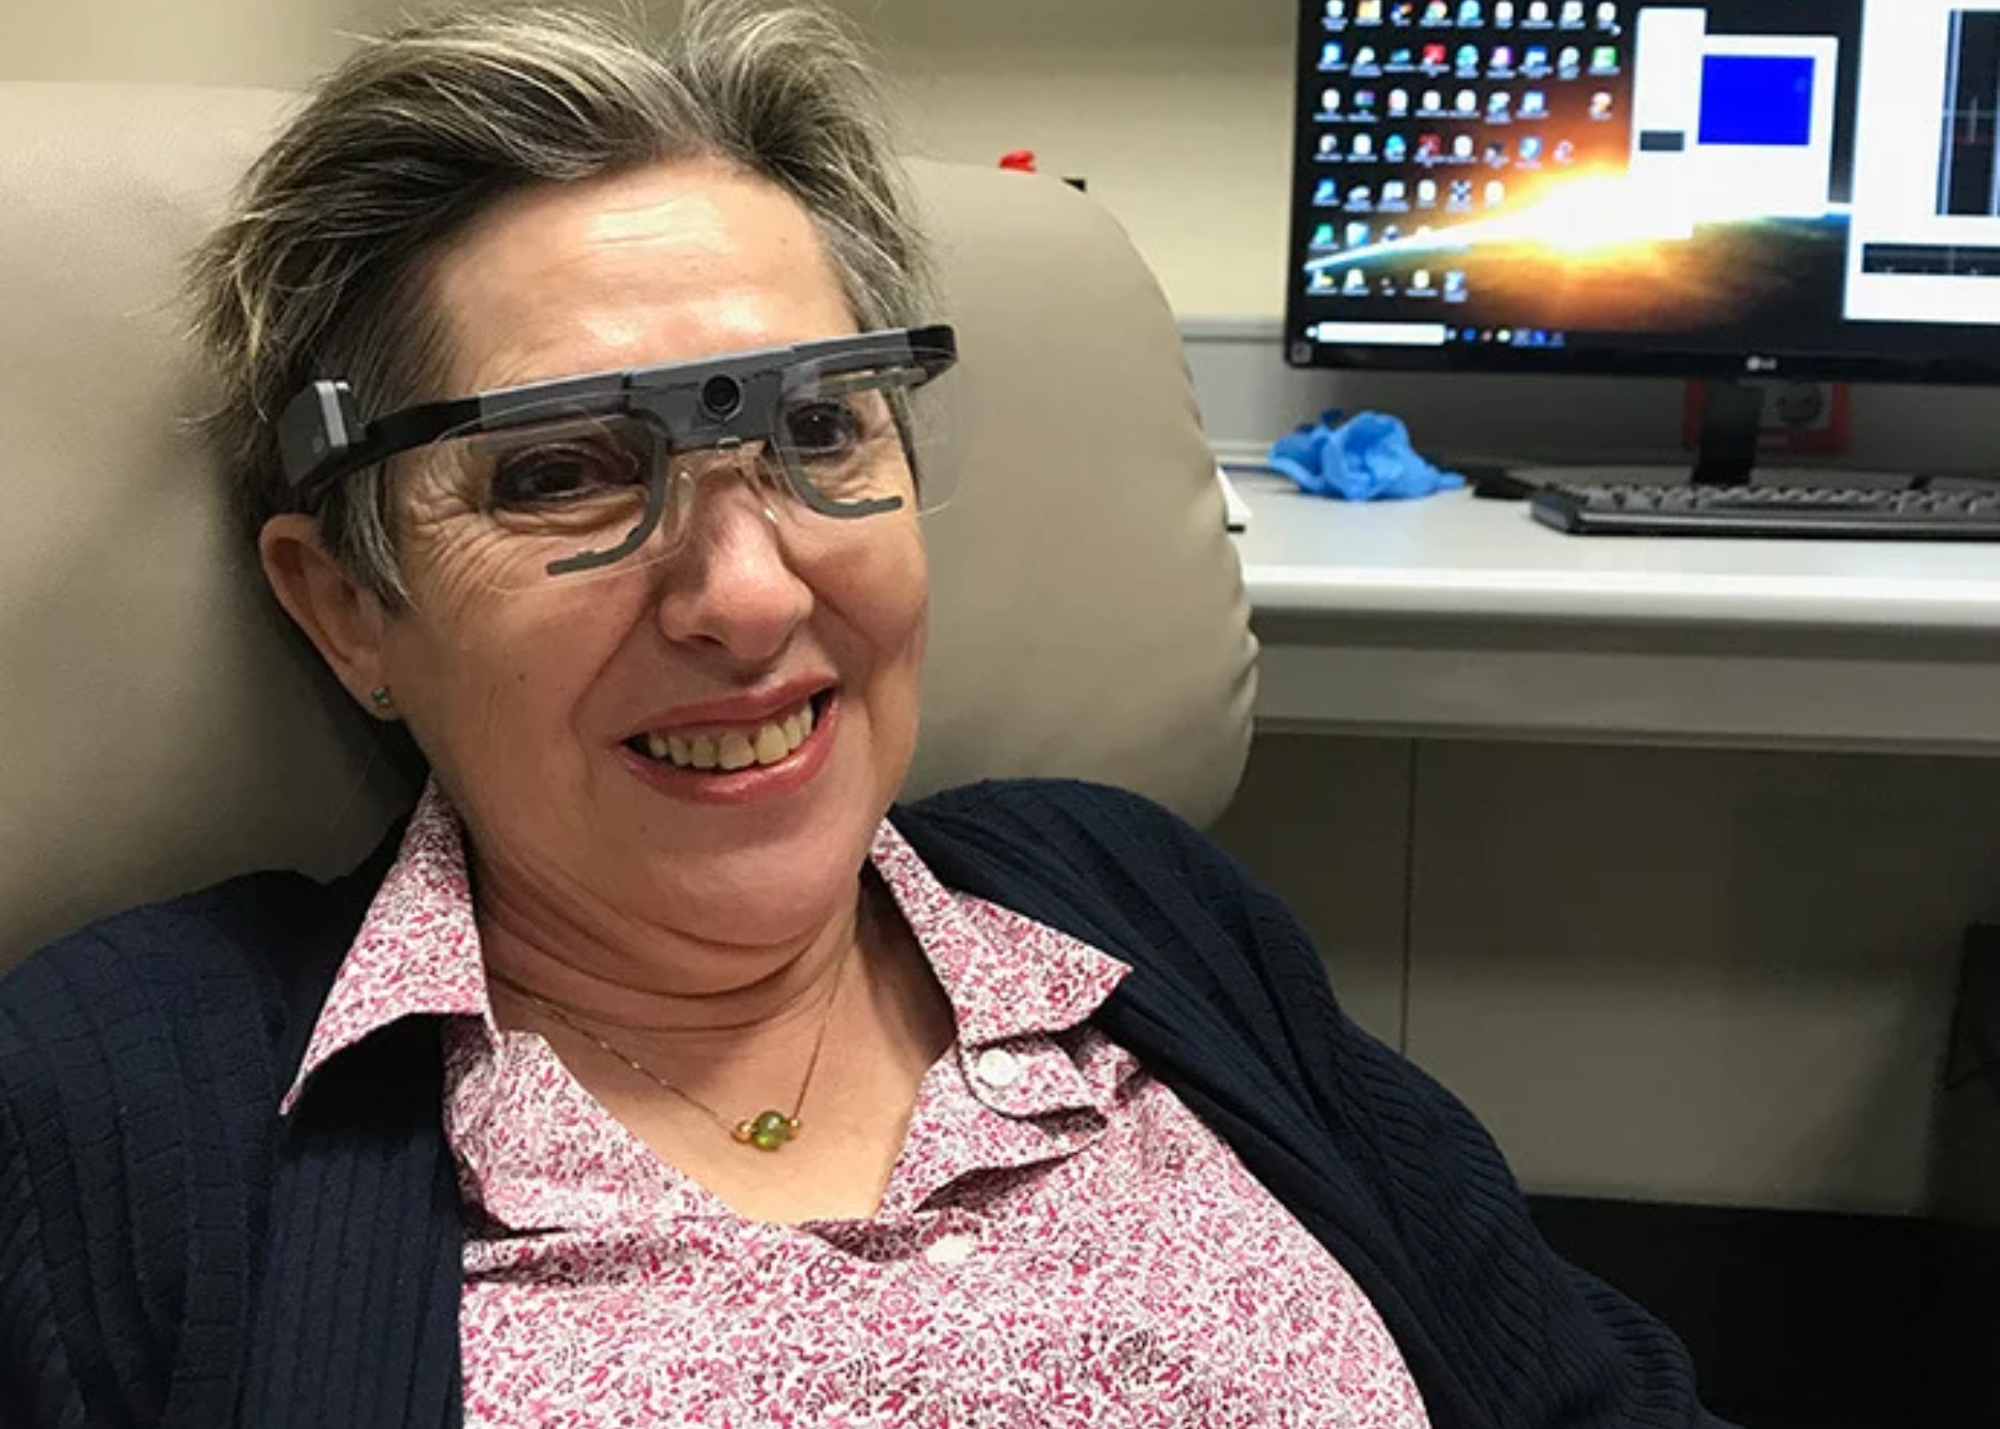 Berna Gómez, a former science teacher who has been blind for 16 years is wearing a specialized eyewear